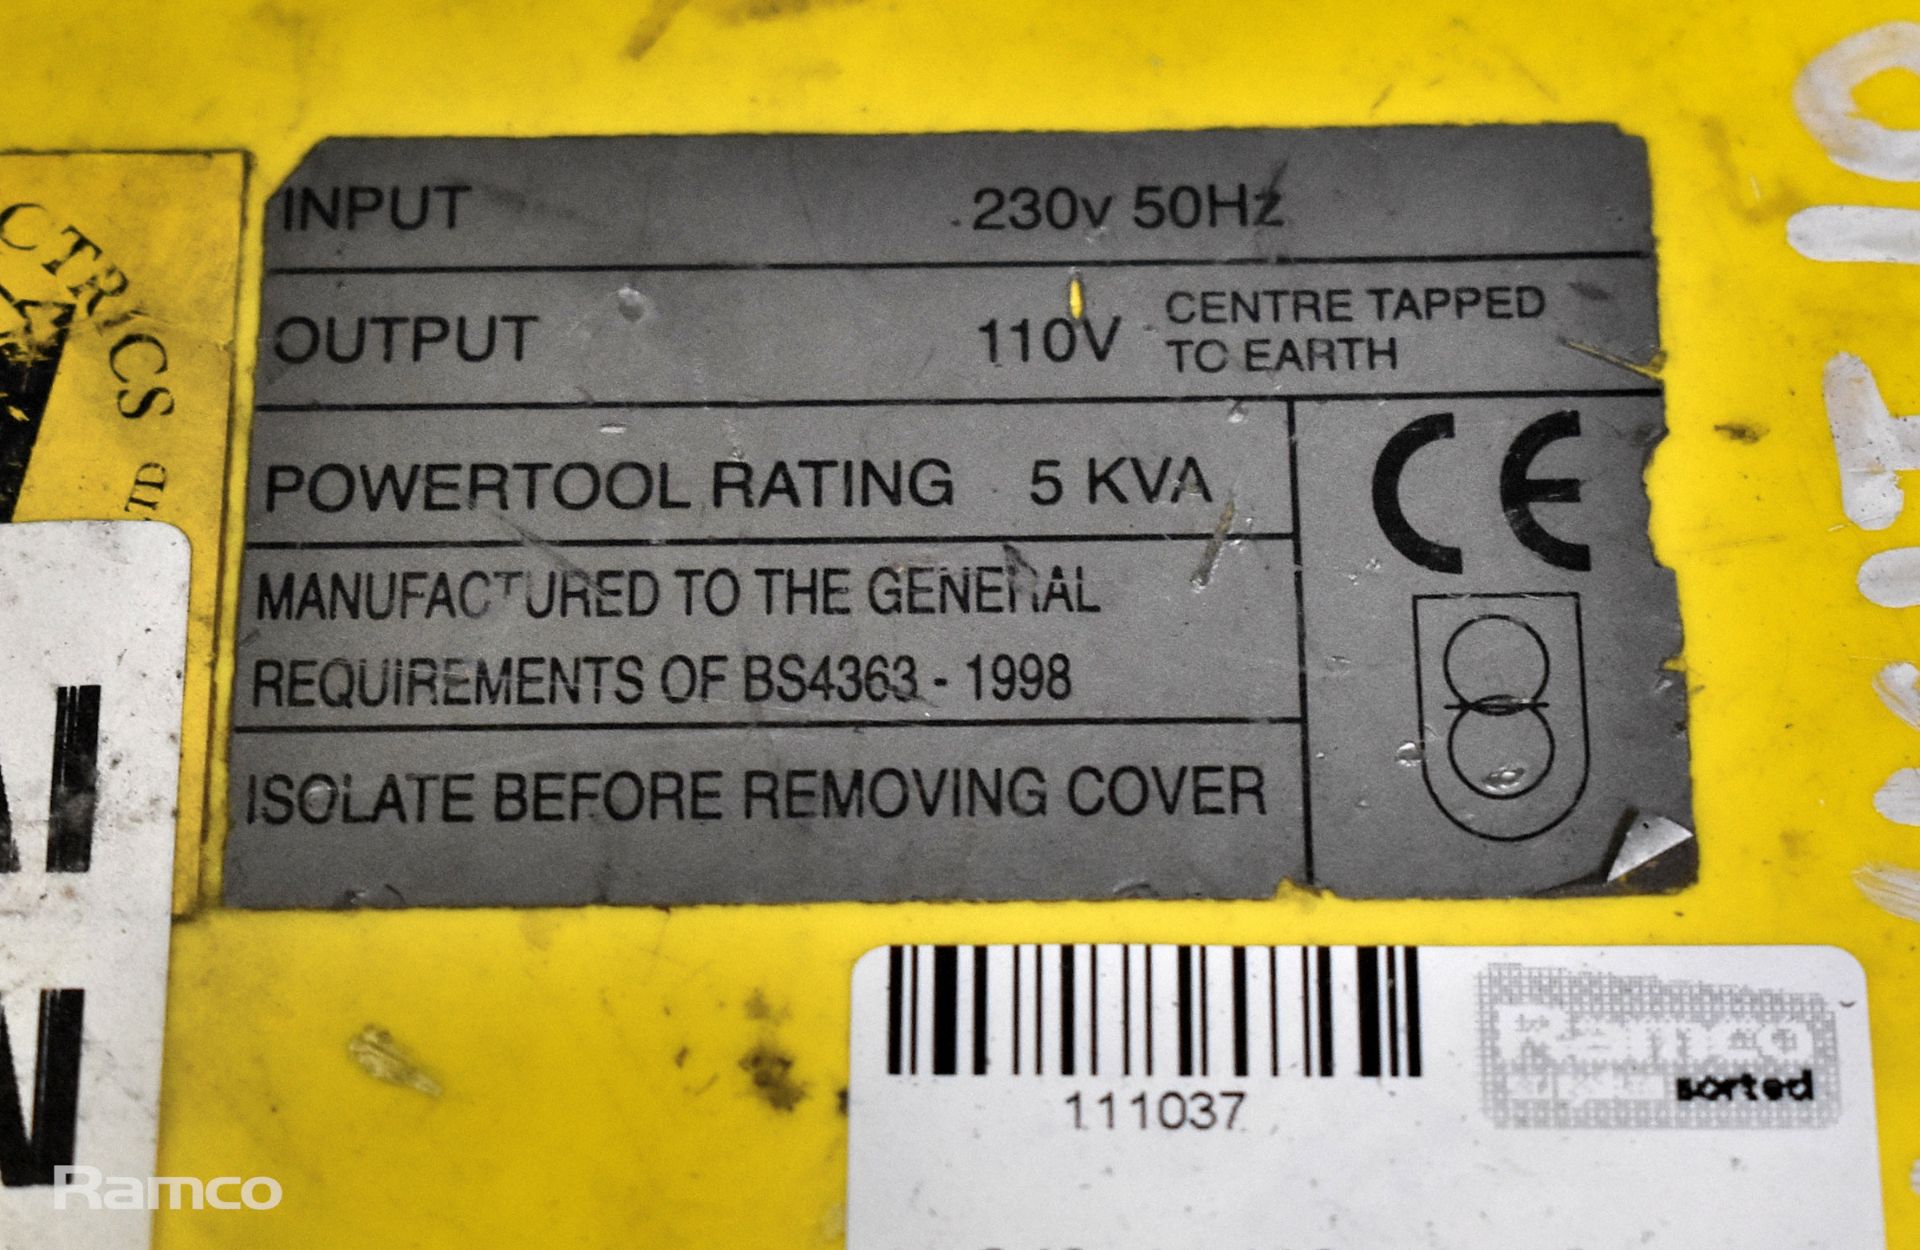 240v to 110v transformer (missing socket cover) - Image 3 of 3